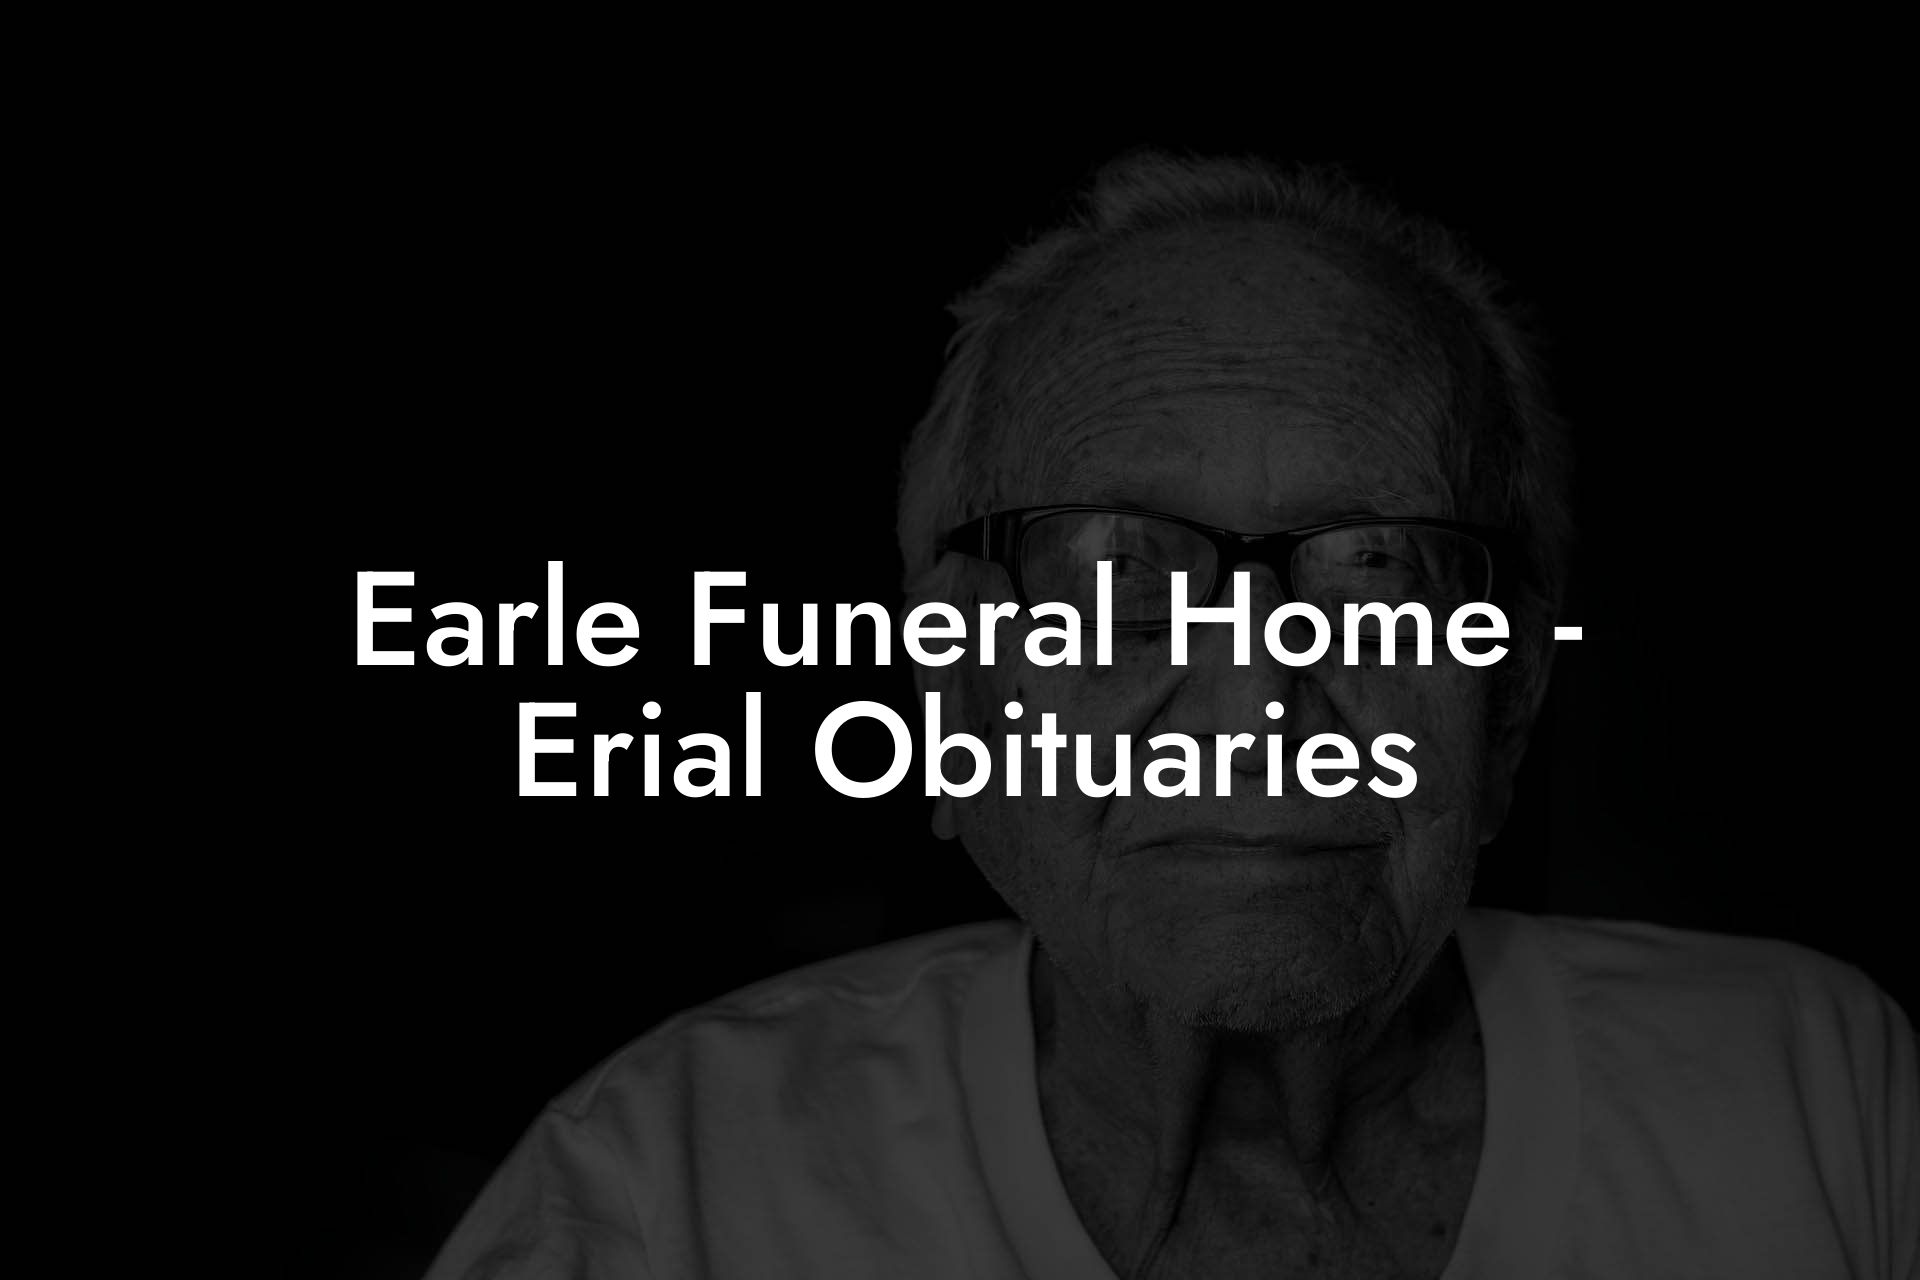 Earle Funeral Home - Erial Obituaries